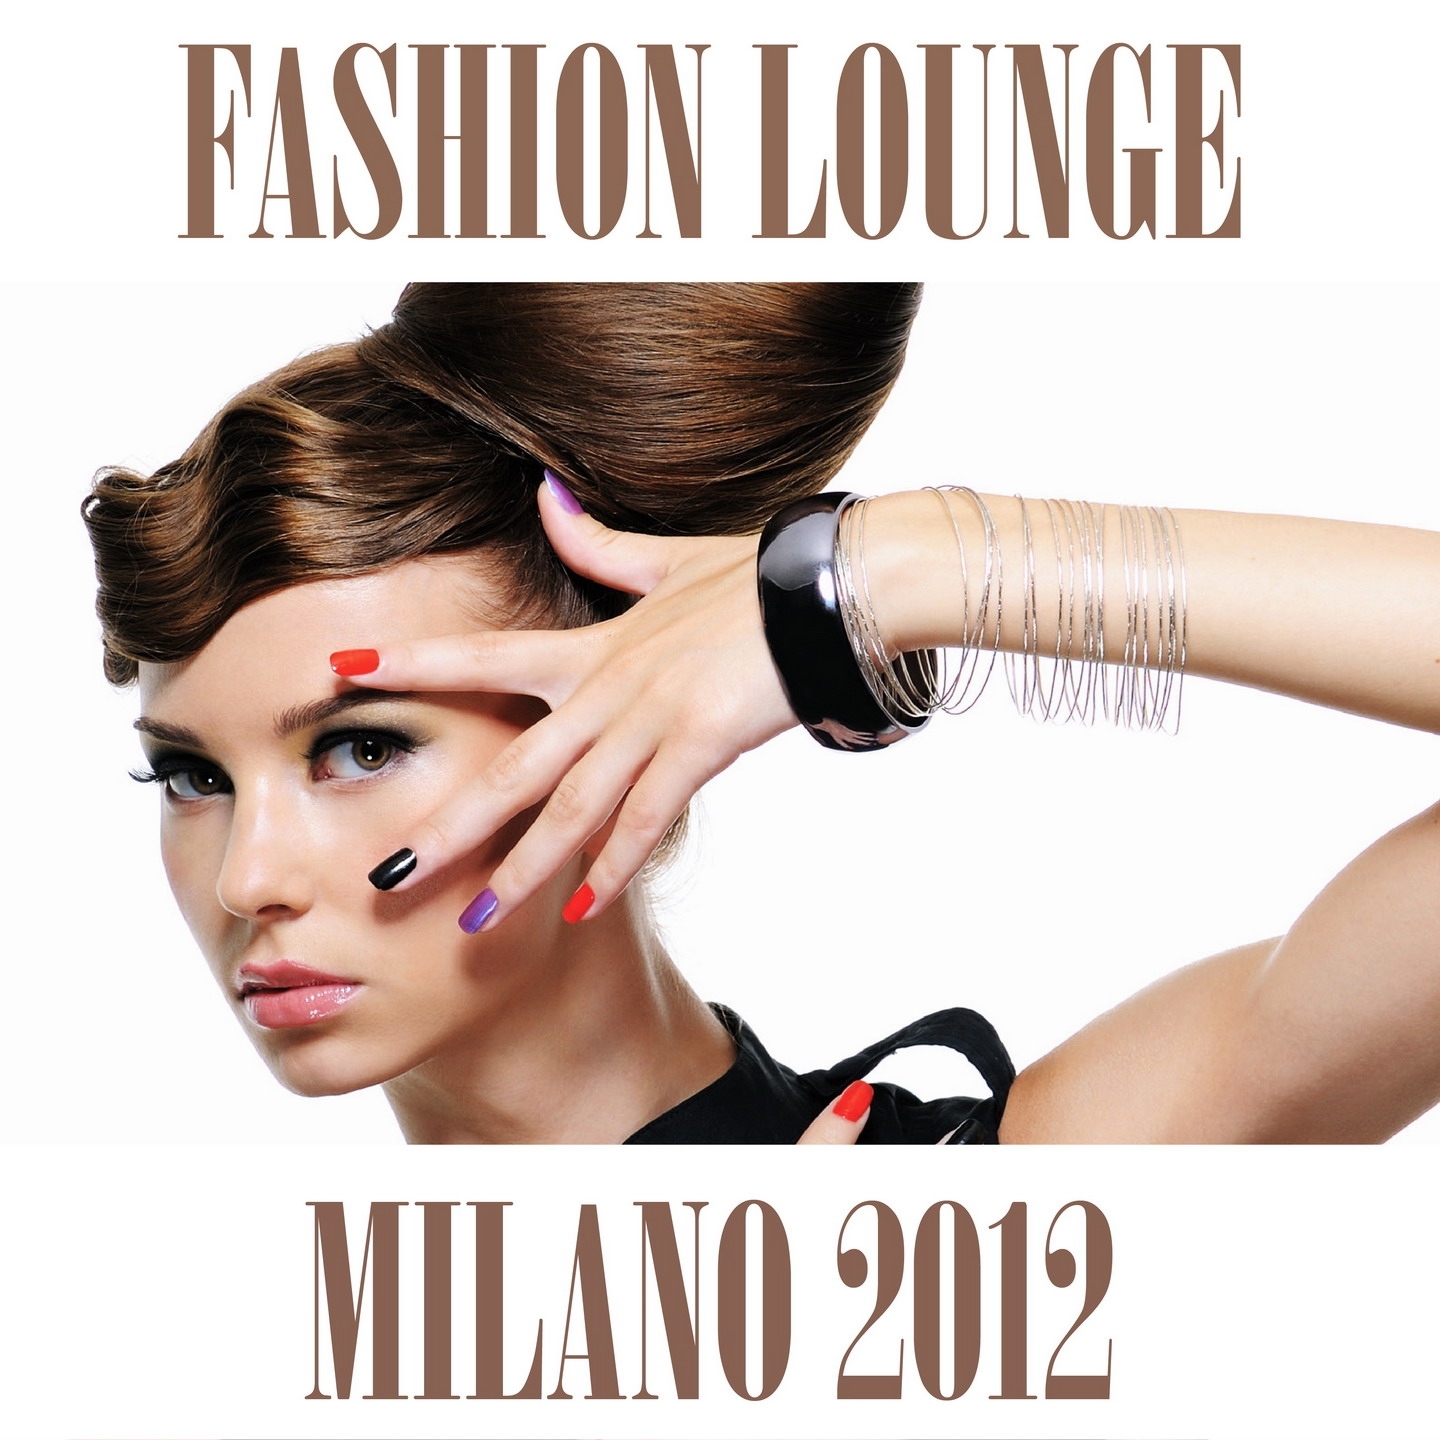 Fashion Lounge Milano 2012